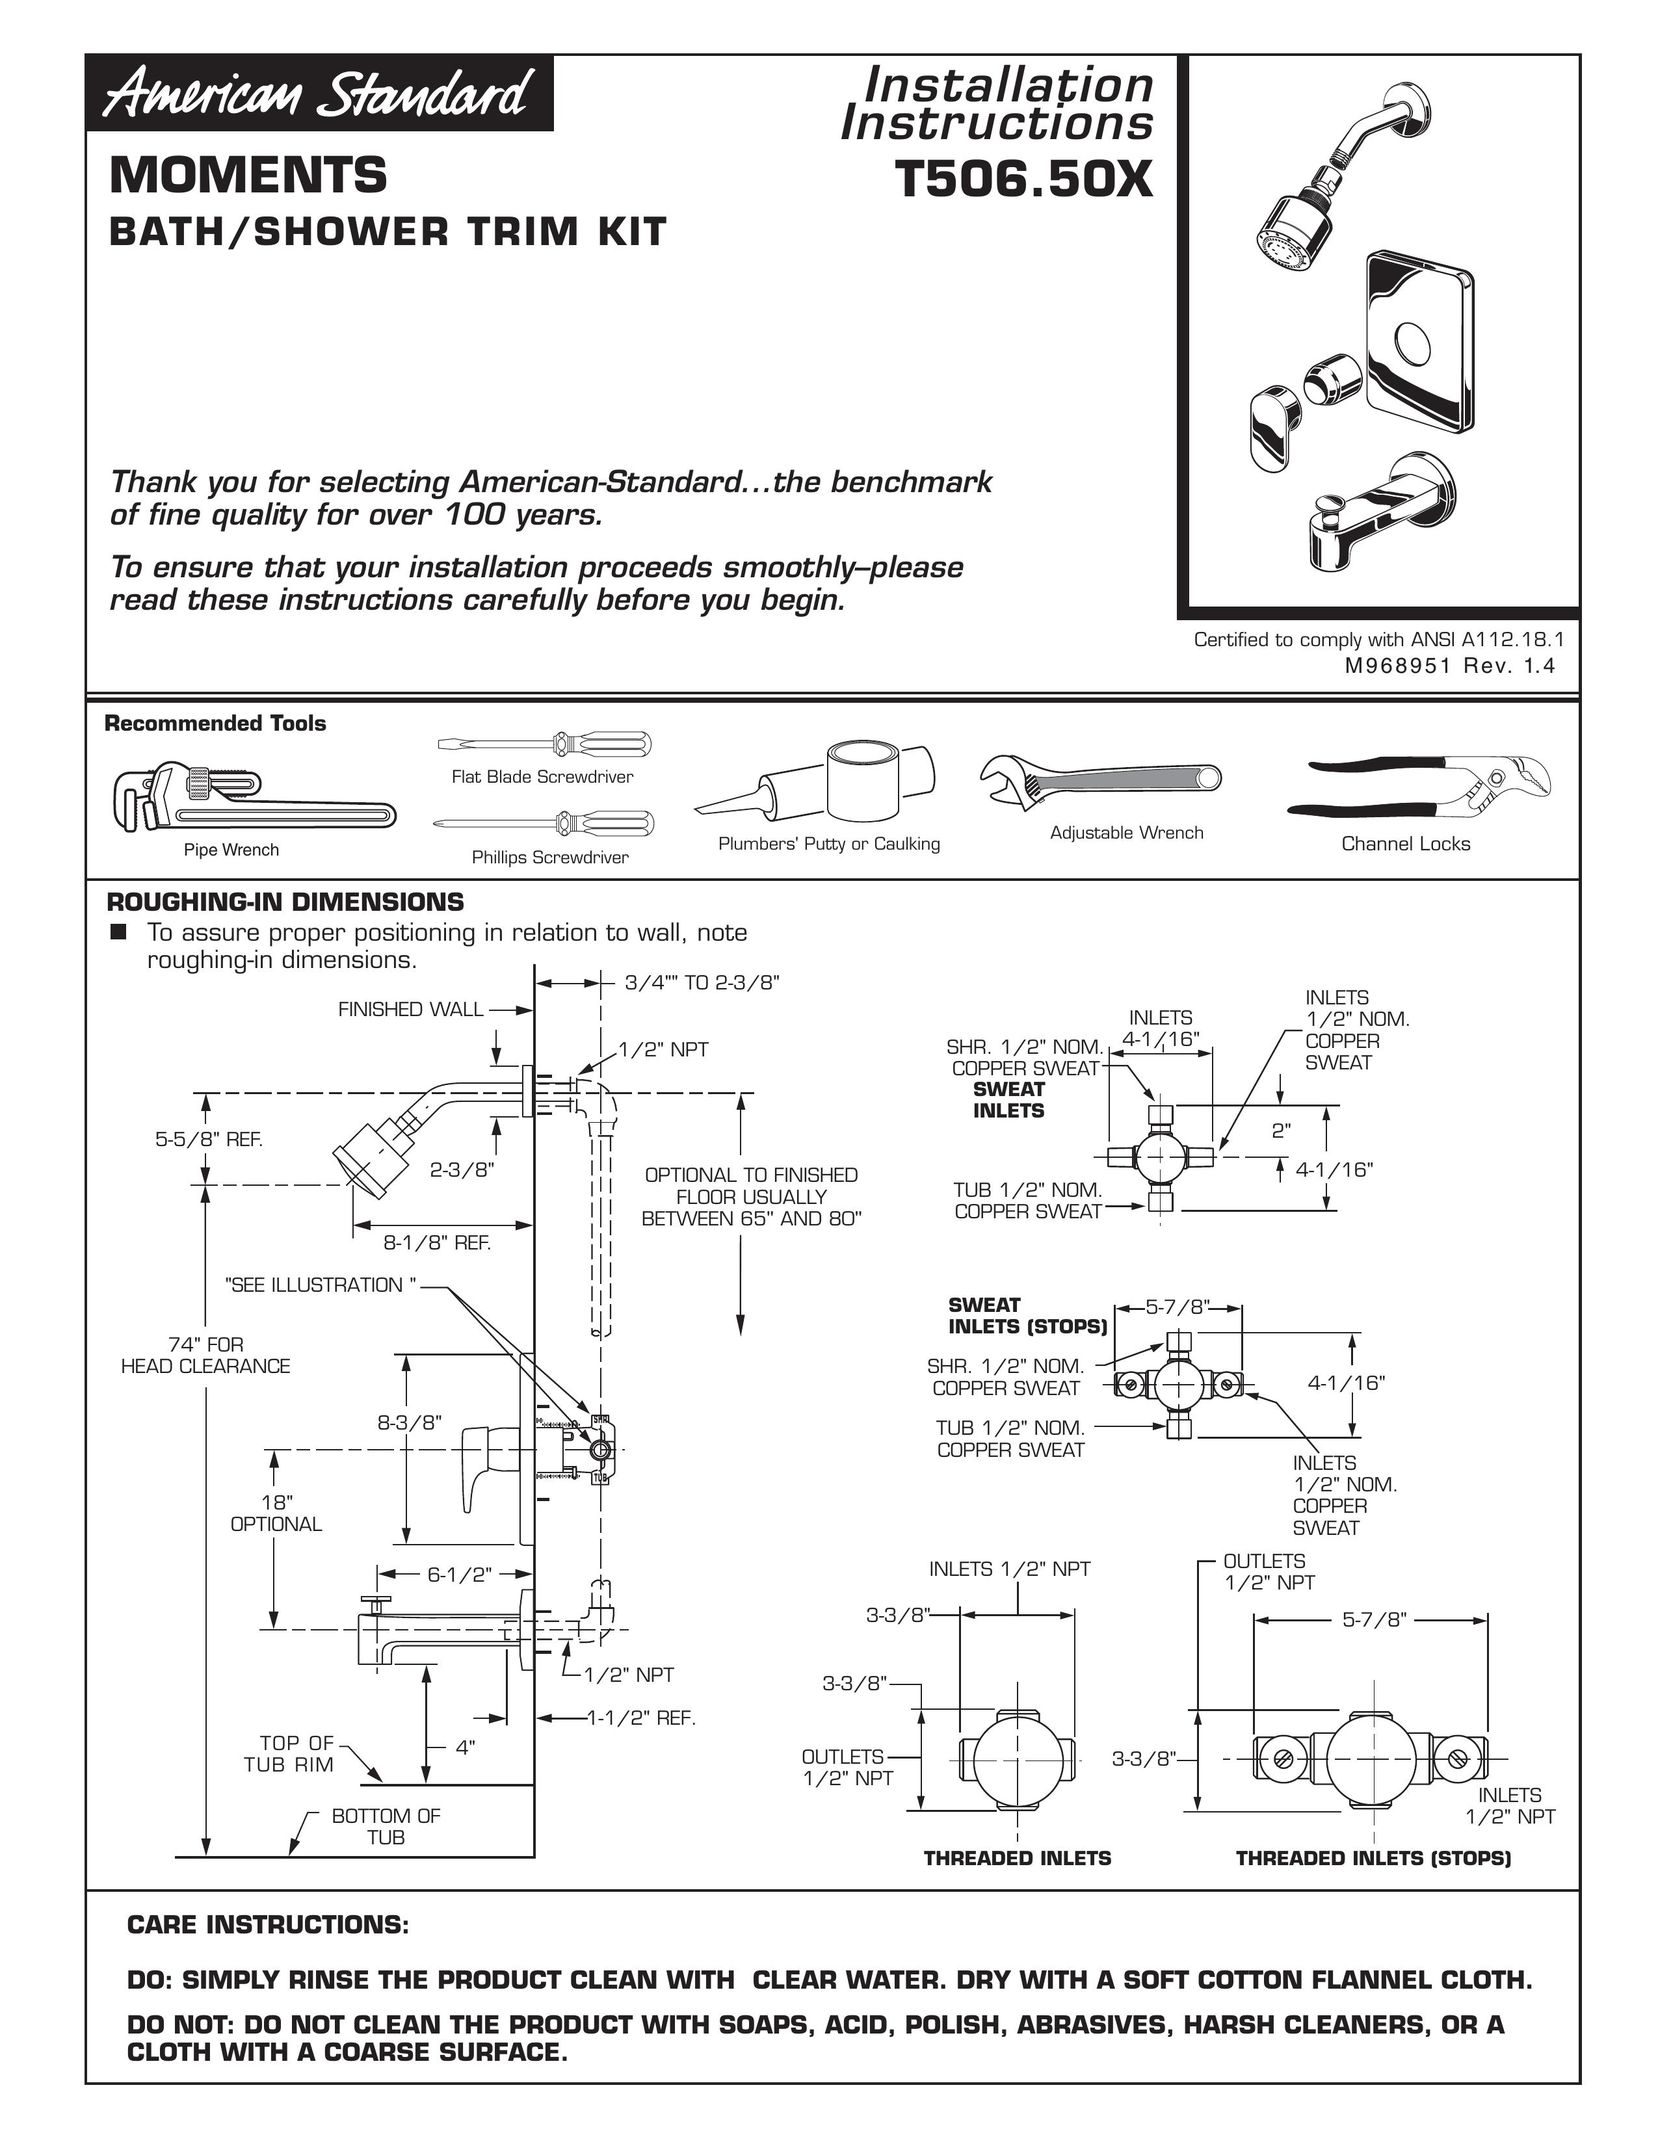 American Standard T506.50X Appliance Trim Kit User Manual